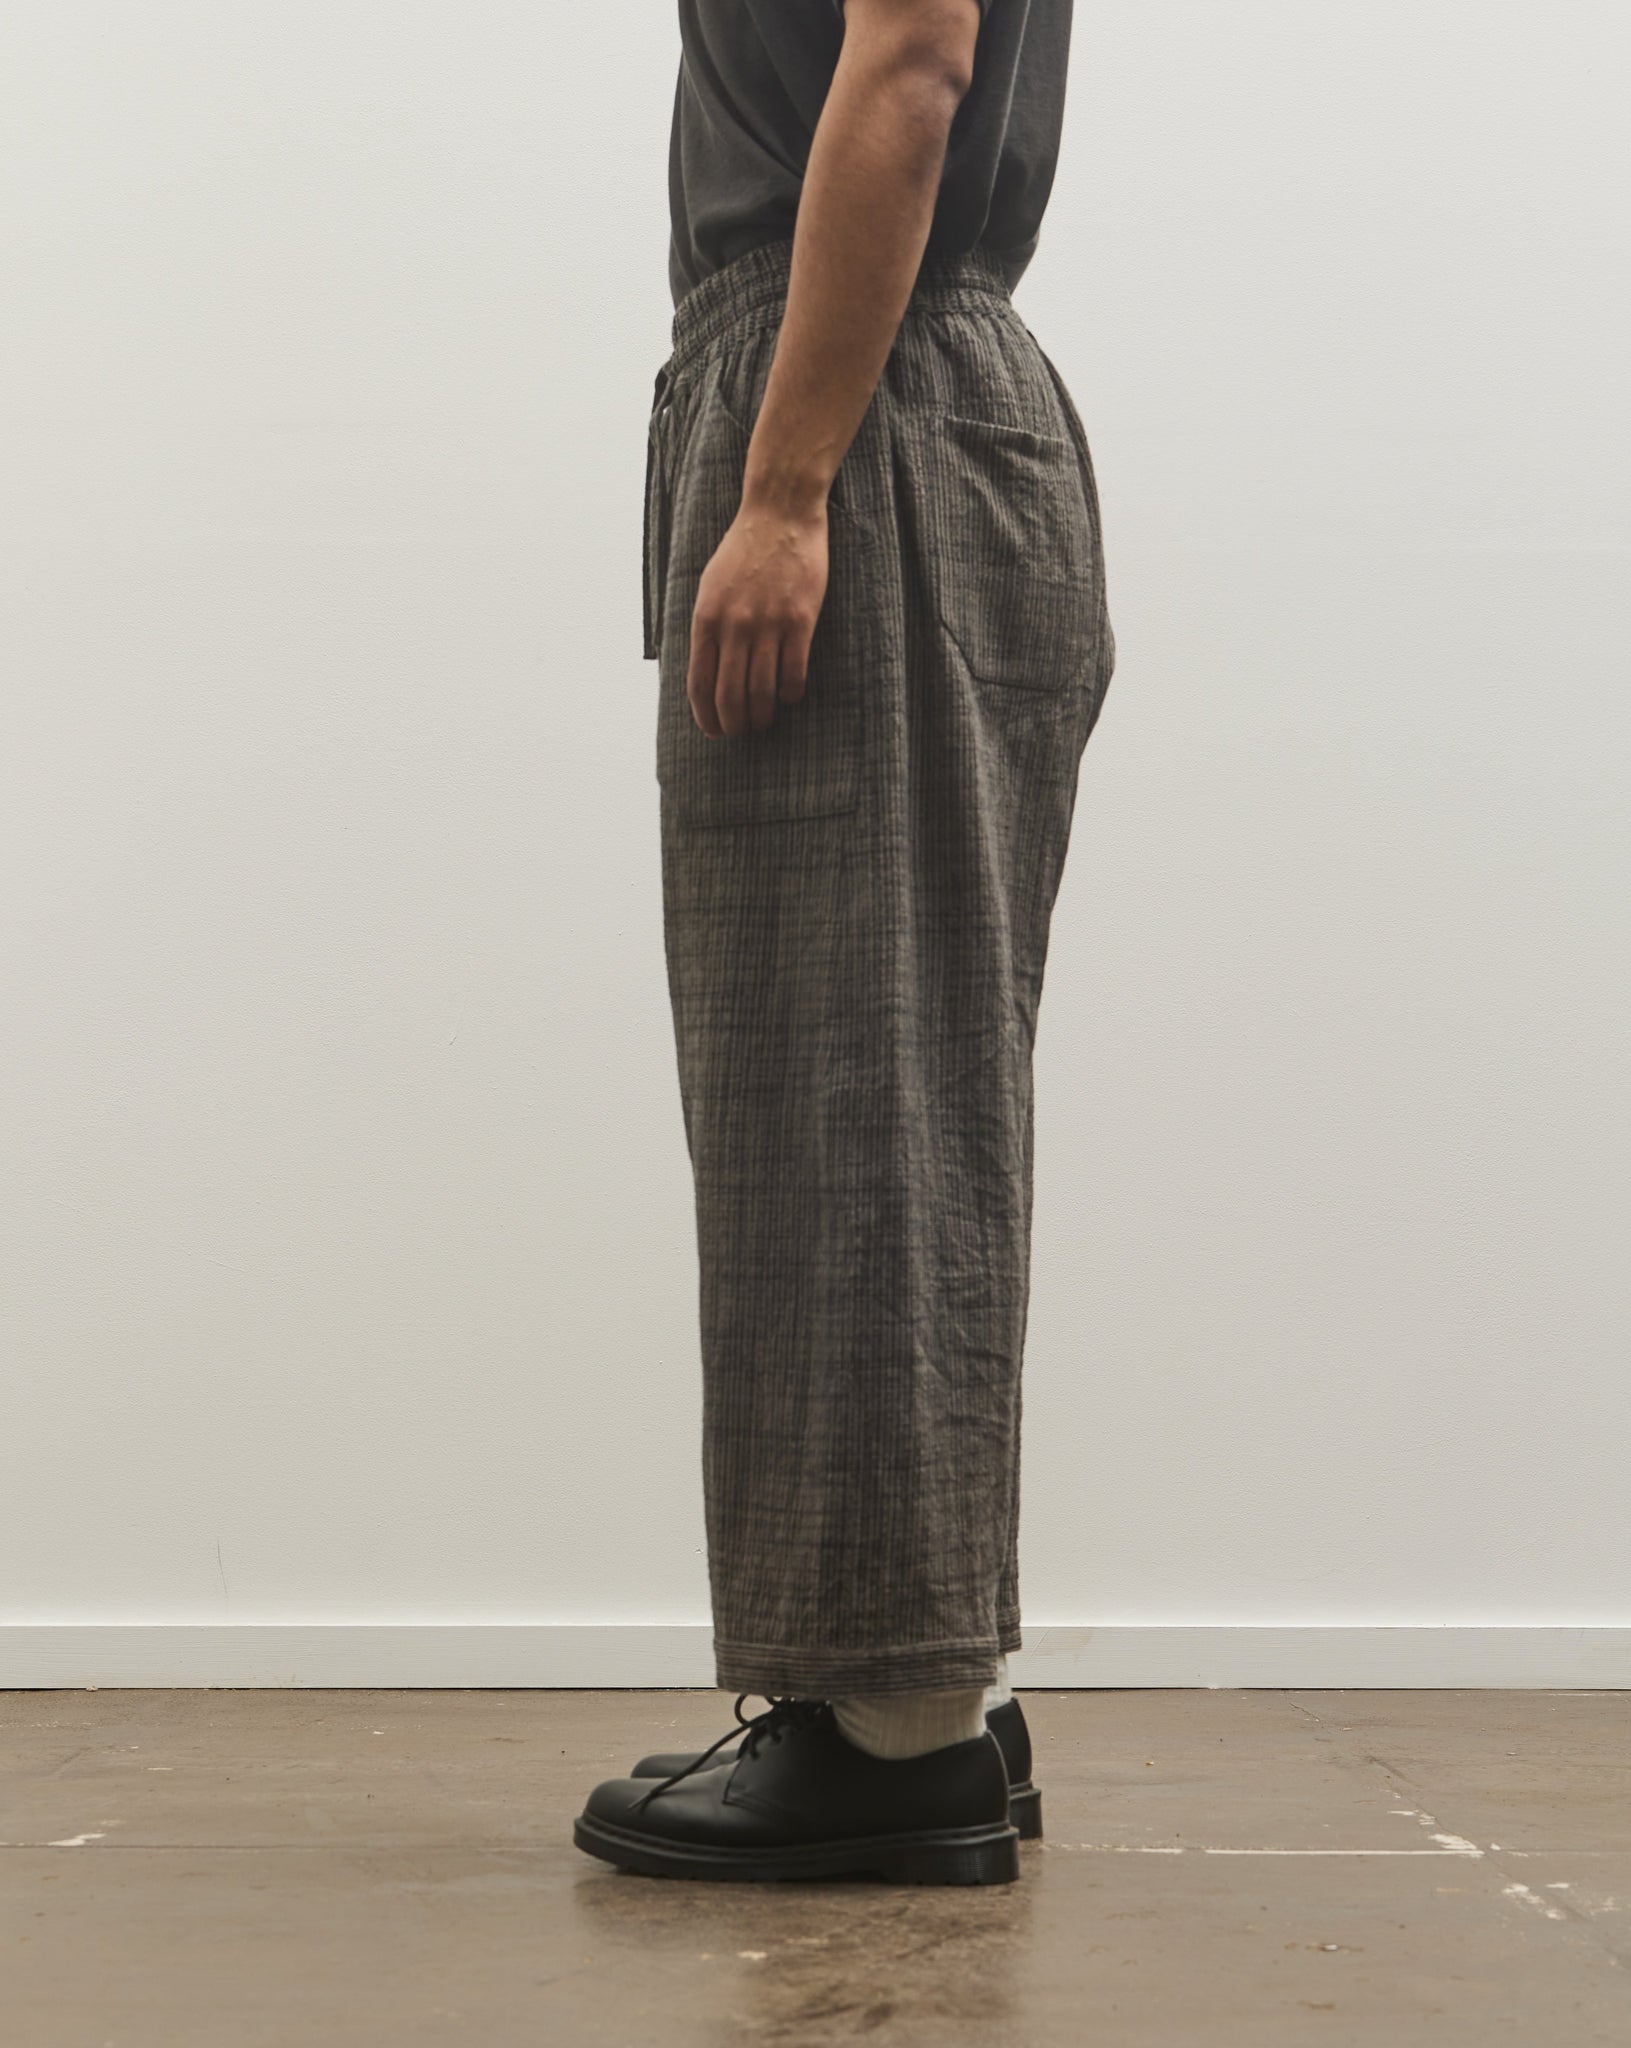 Jan-Jan Van Essche Trousers #80, Vintage Stripe